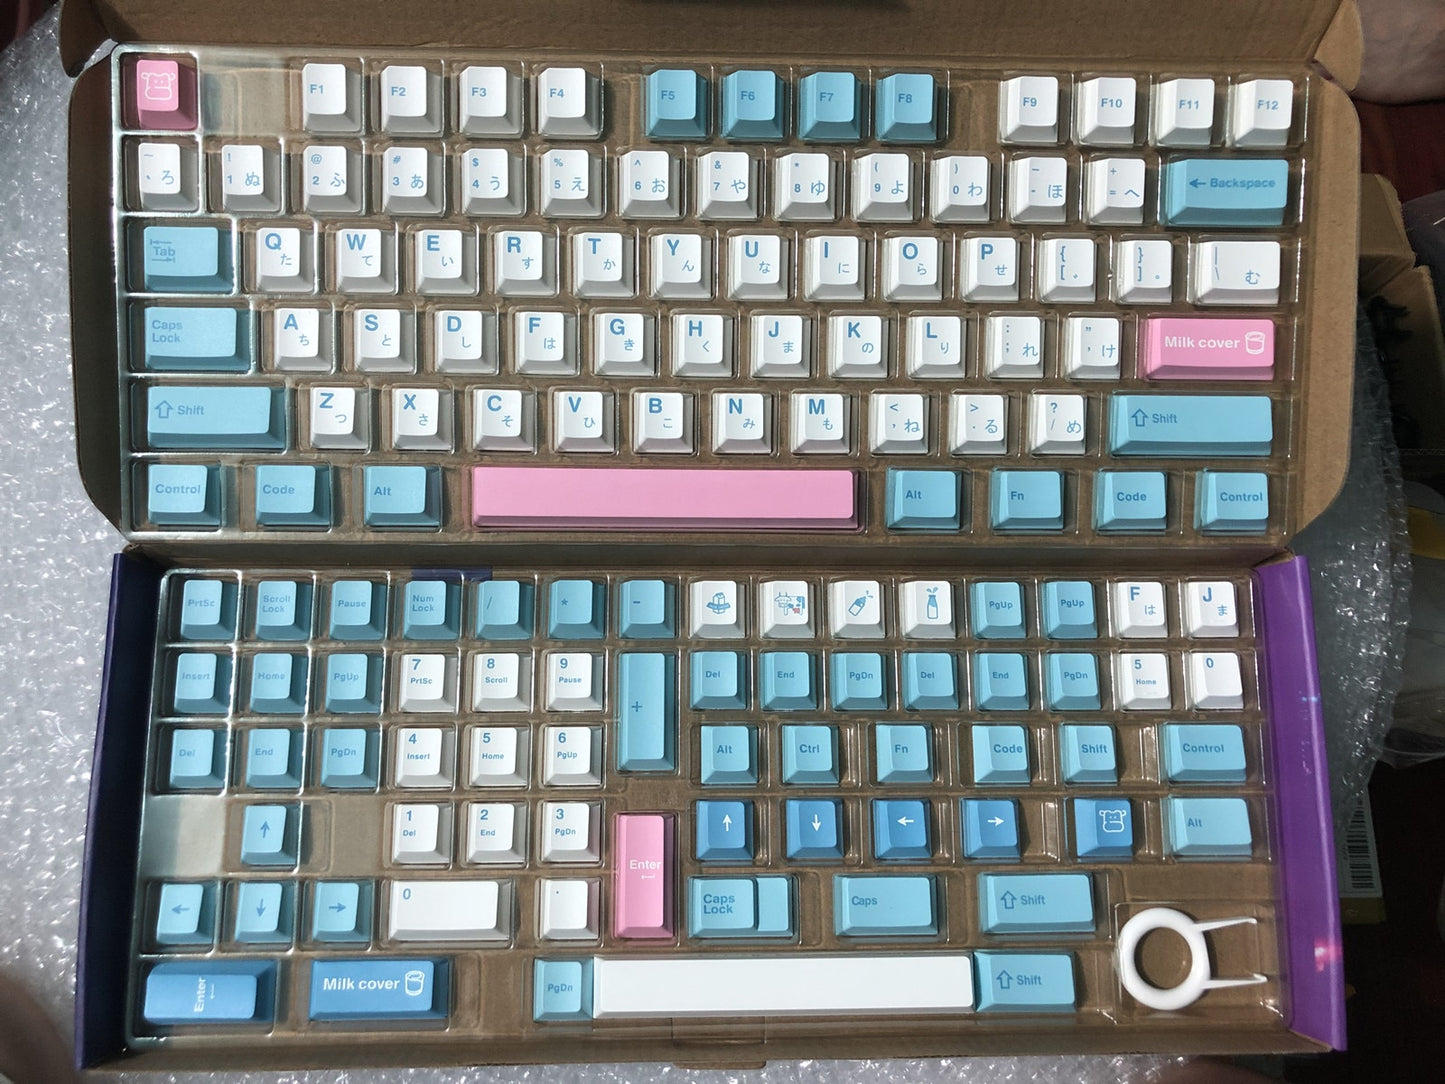 Milk Keycaps PBT for mechanical keyboards